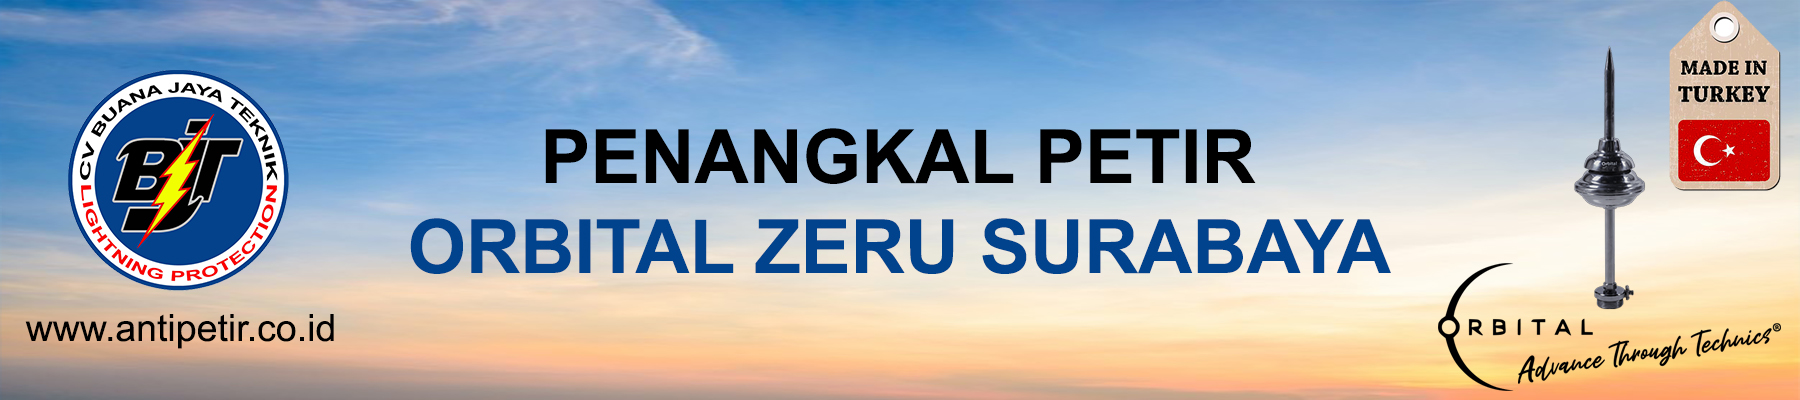 PENANGKAL PETIR SURABAYA - Penangkal Petir ORBITAL ZERU SURABAYA